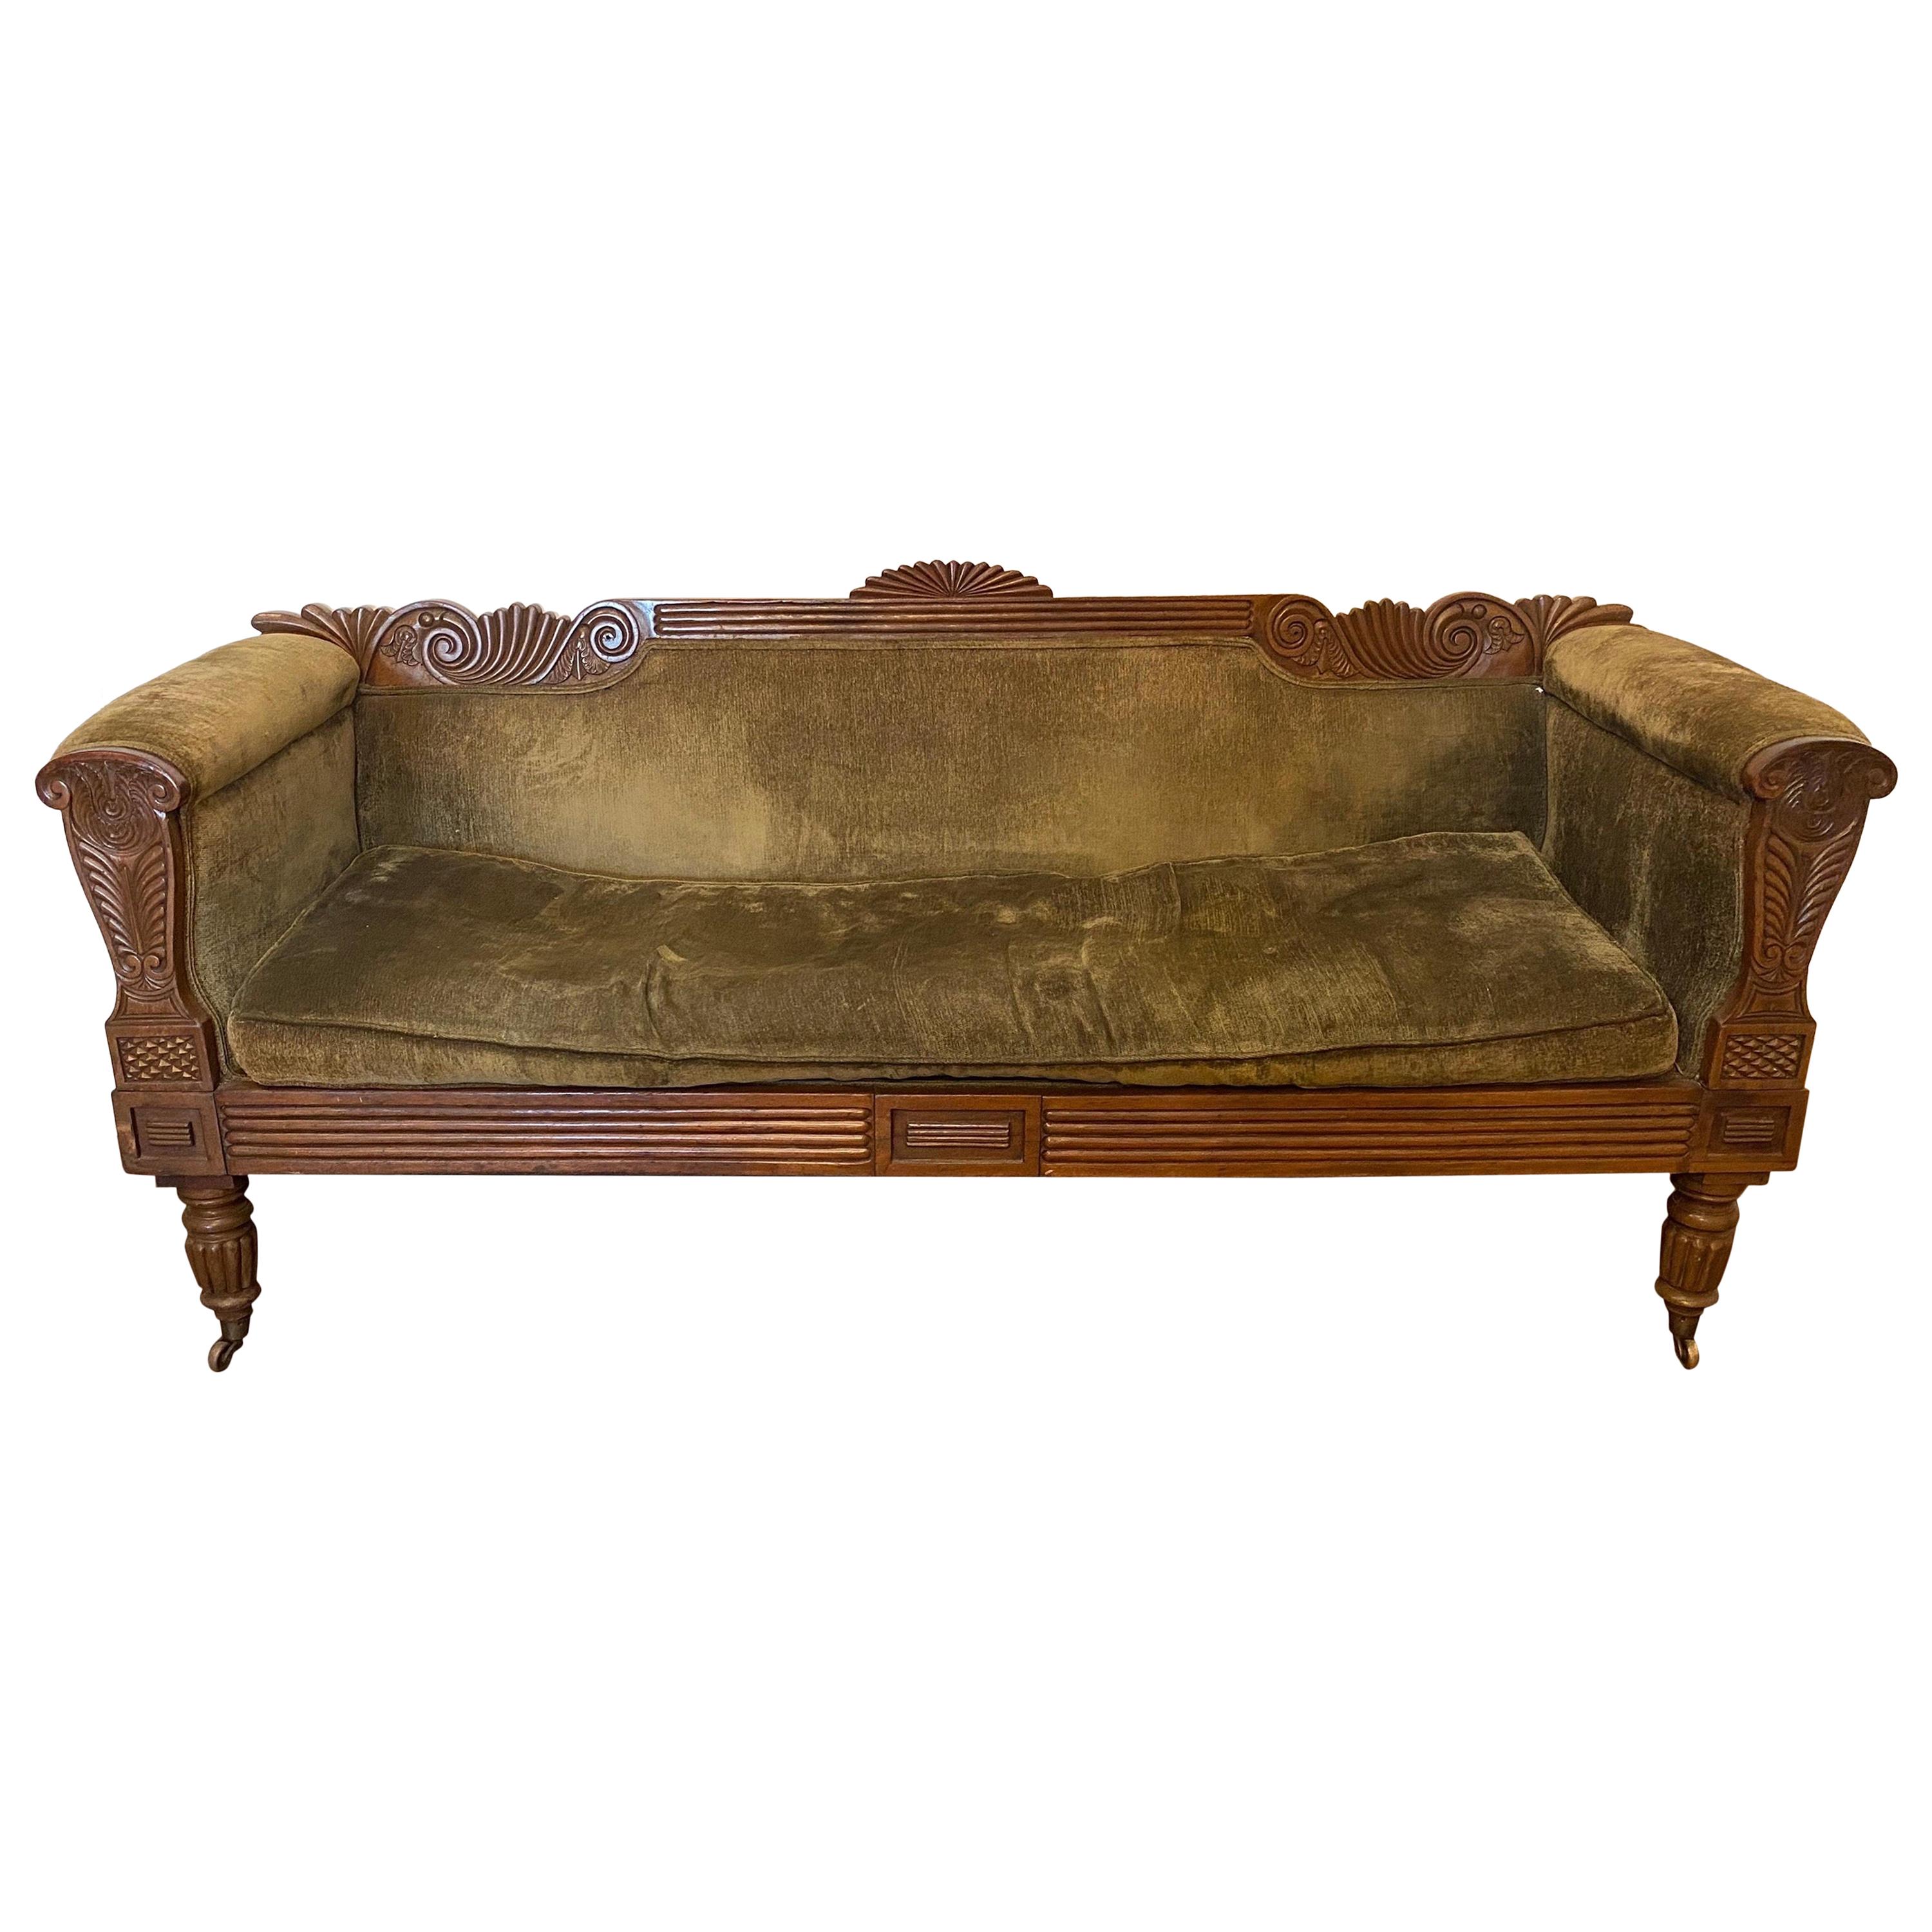 19th Century Carved English Regency Sofa